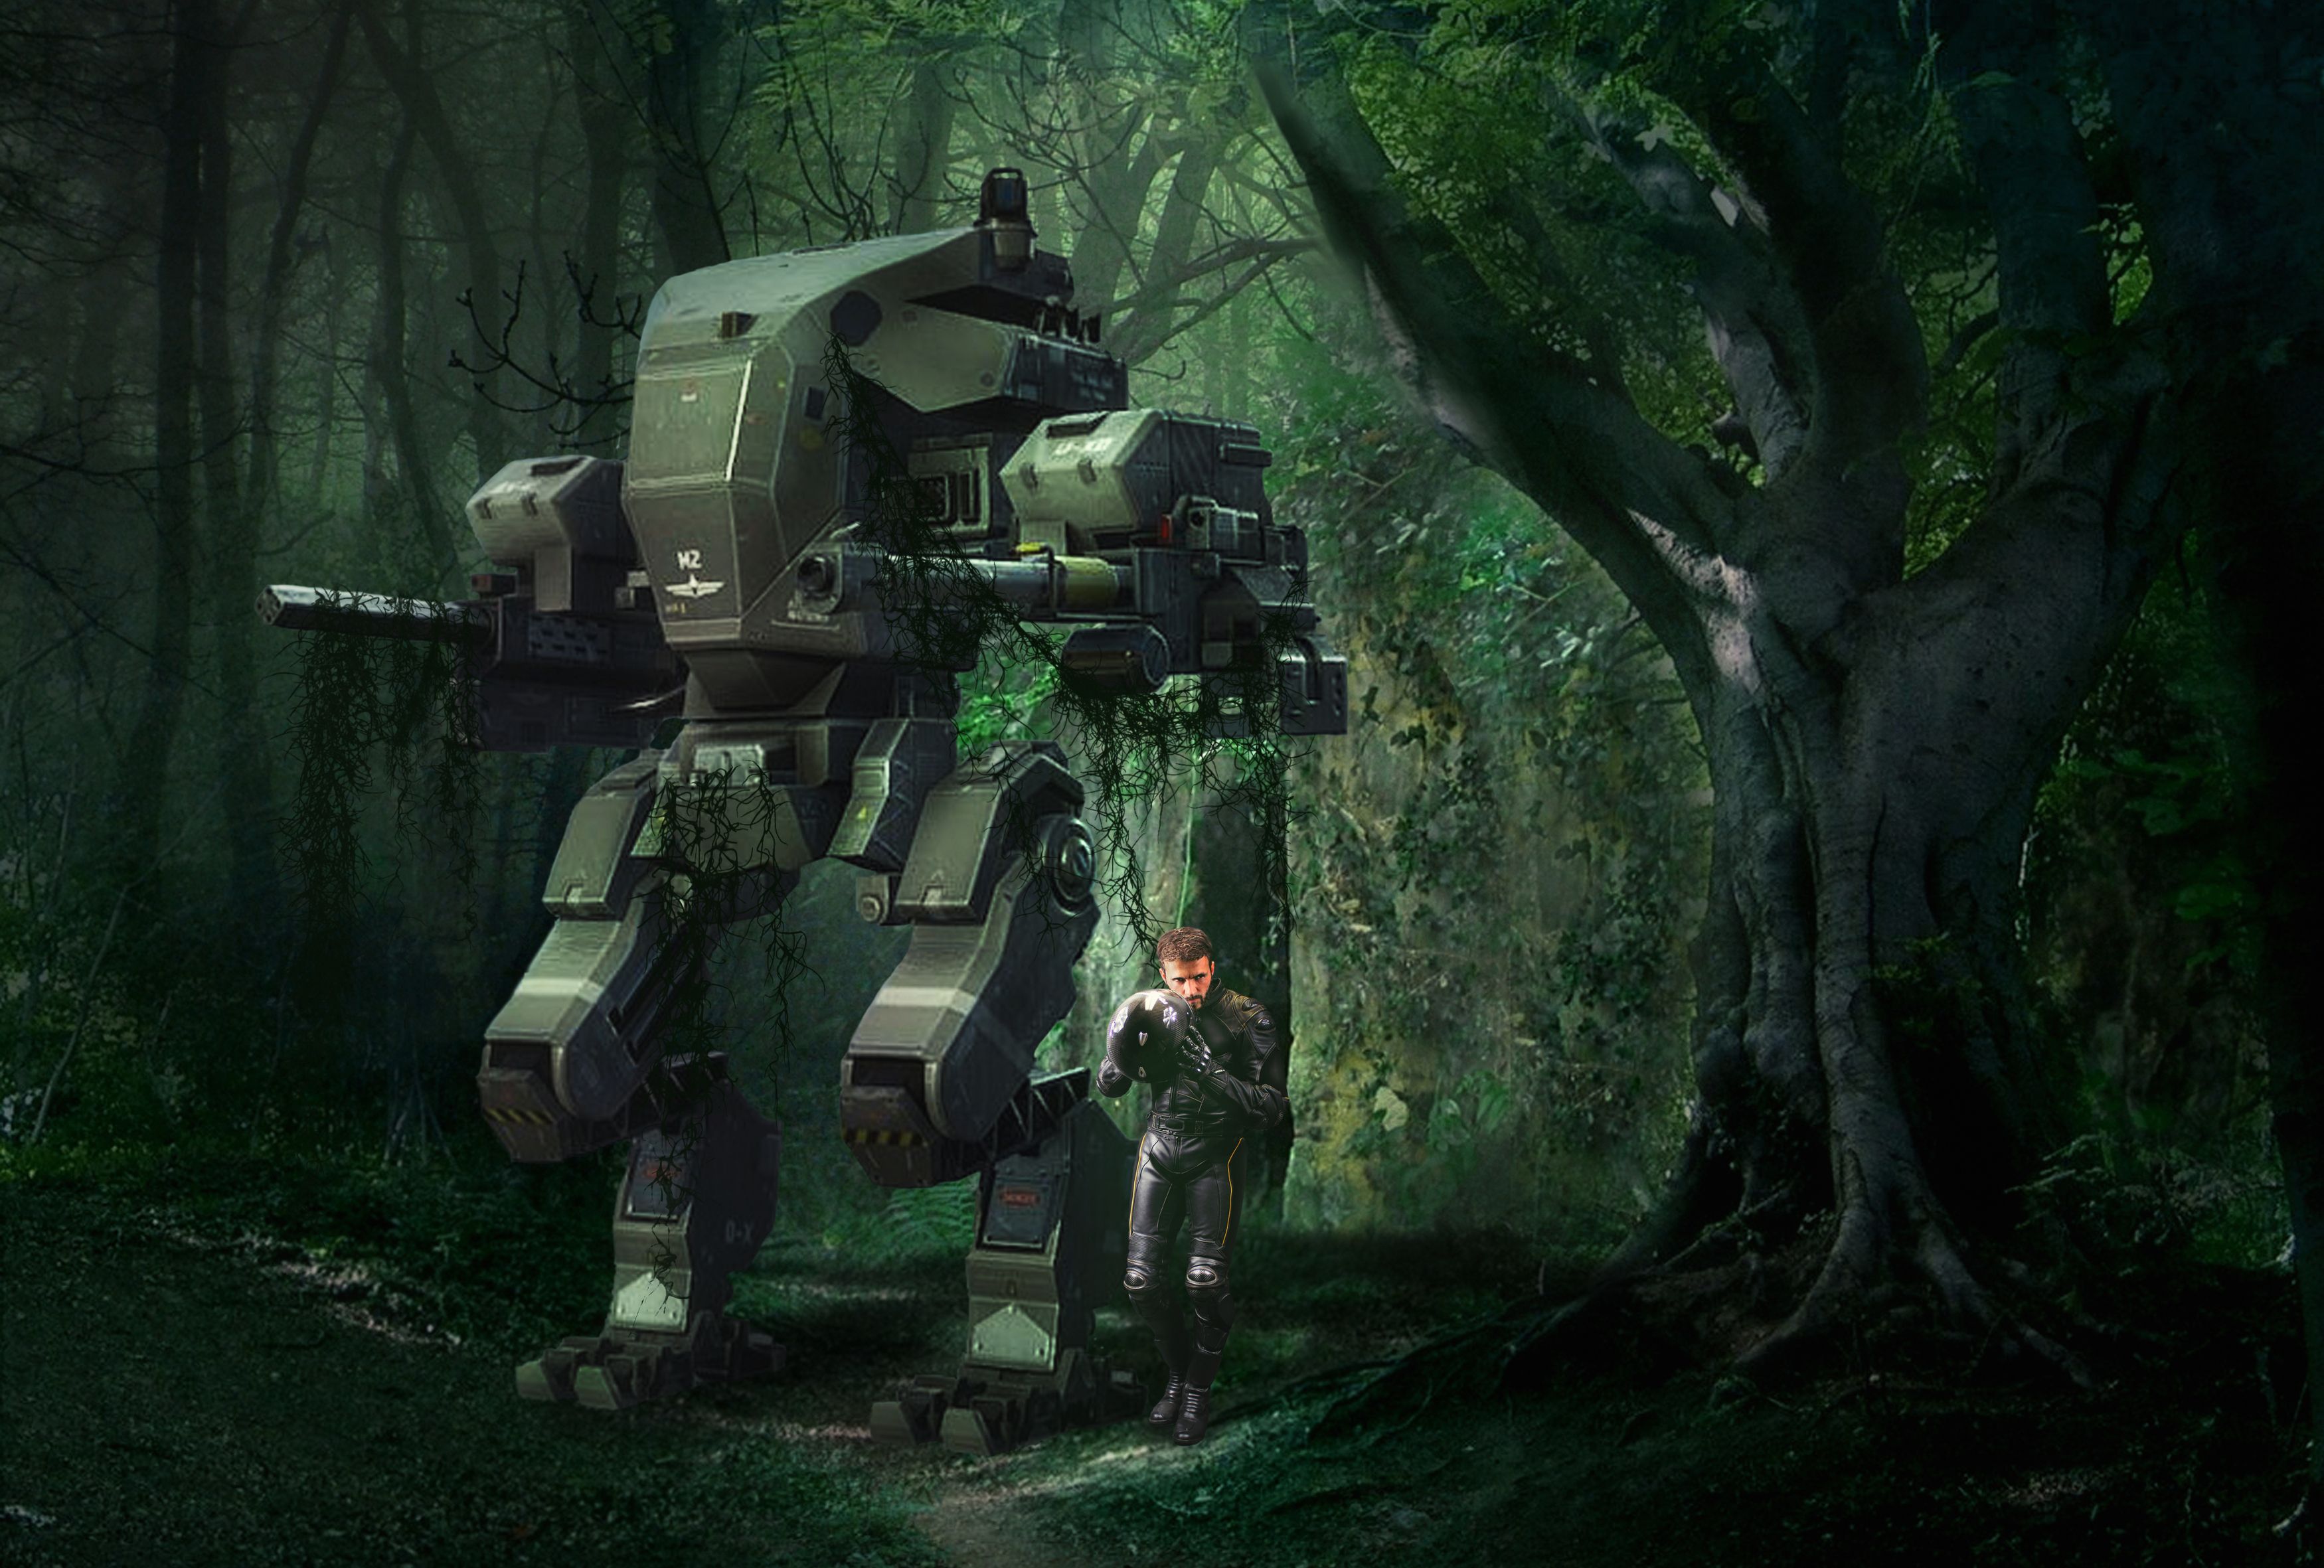 джунгли, робот, мужчина, Sergii Vidov